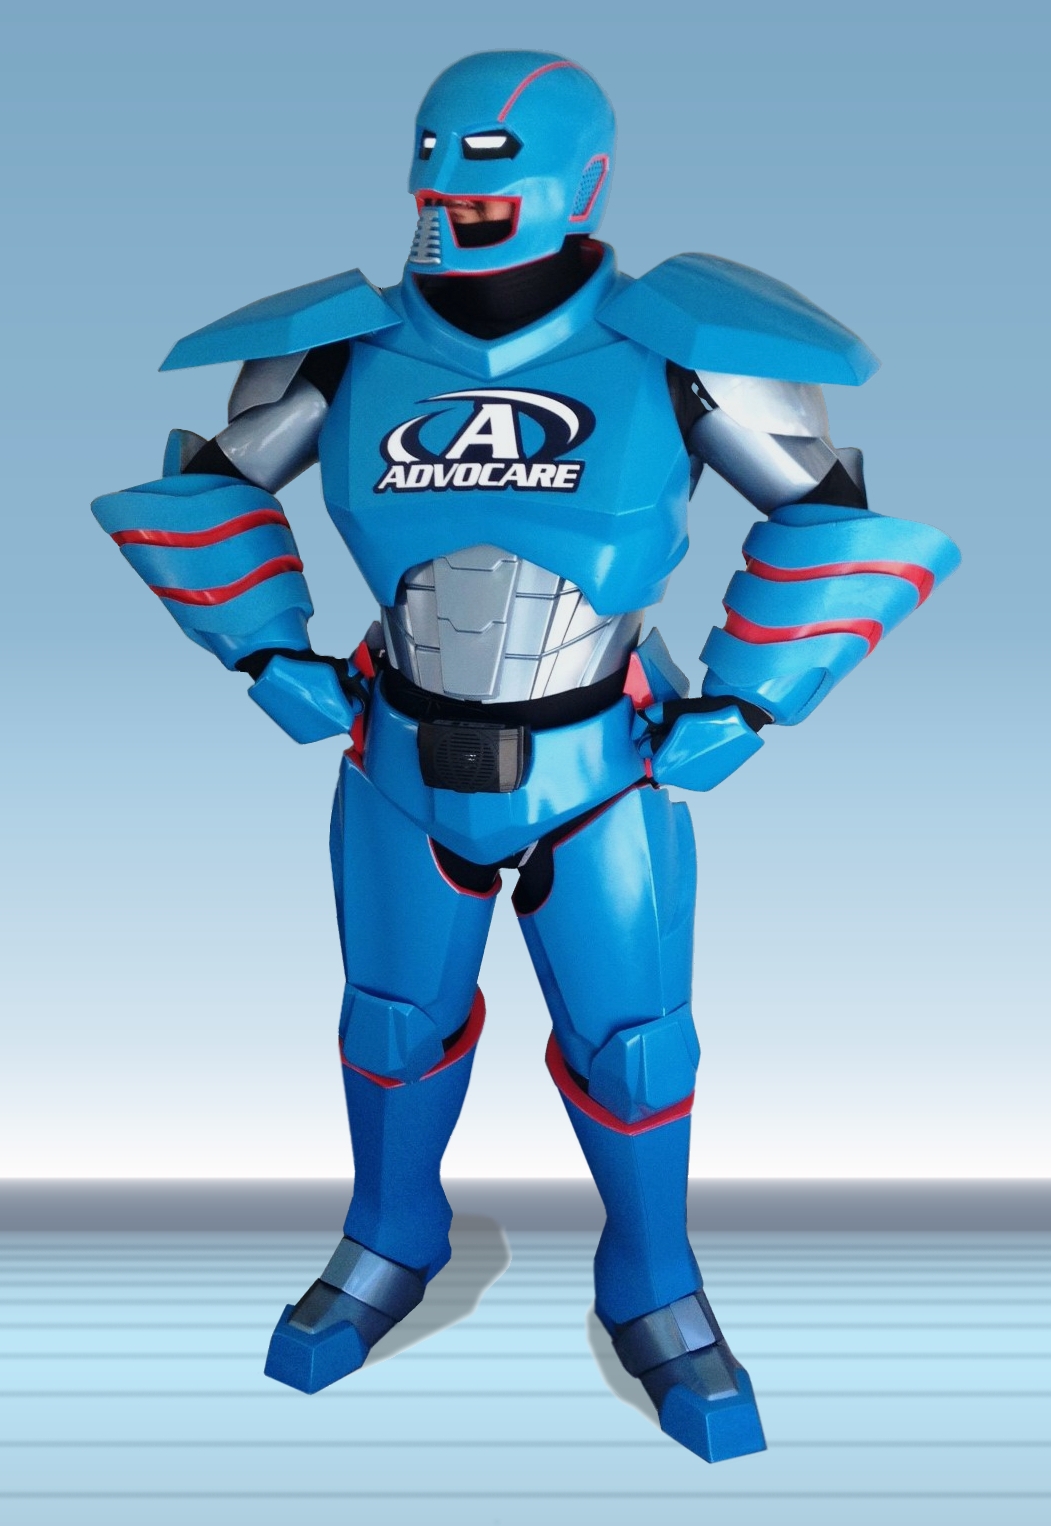 Robot Costume, Trade Show Promotion, Advocare